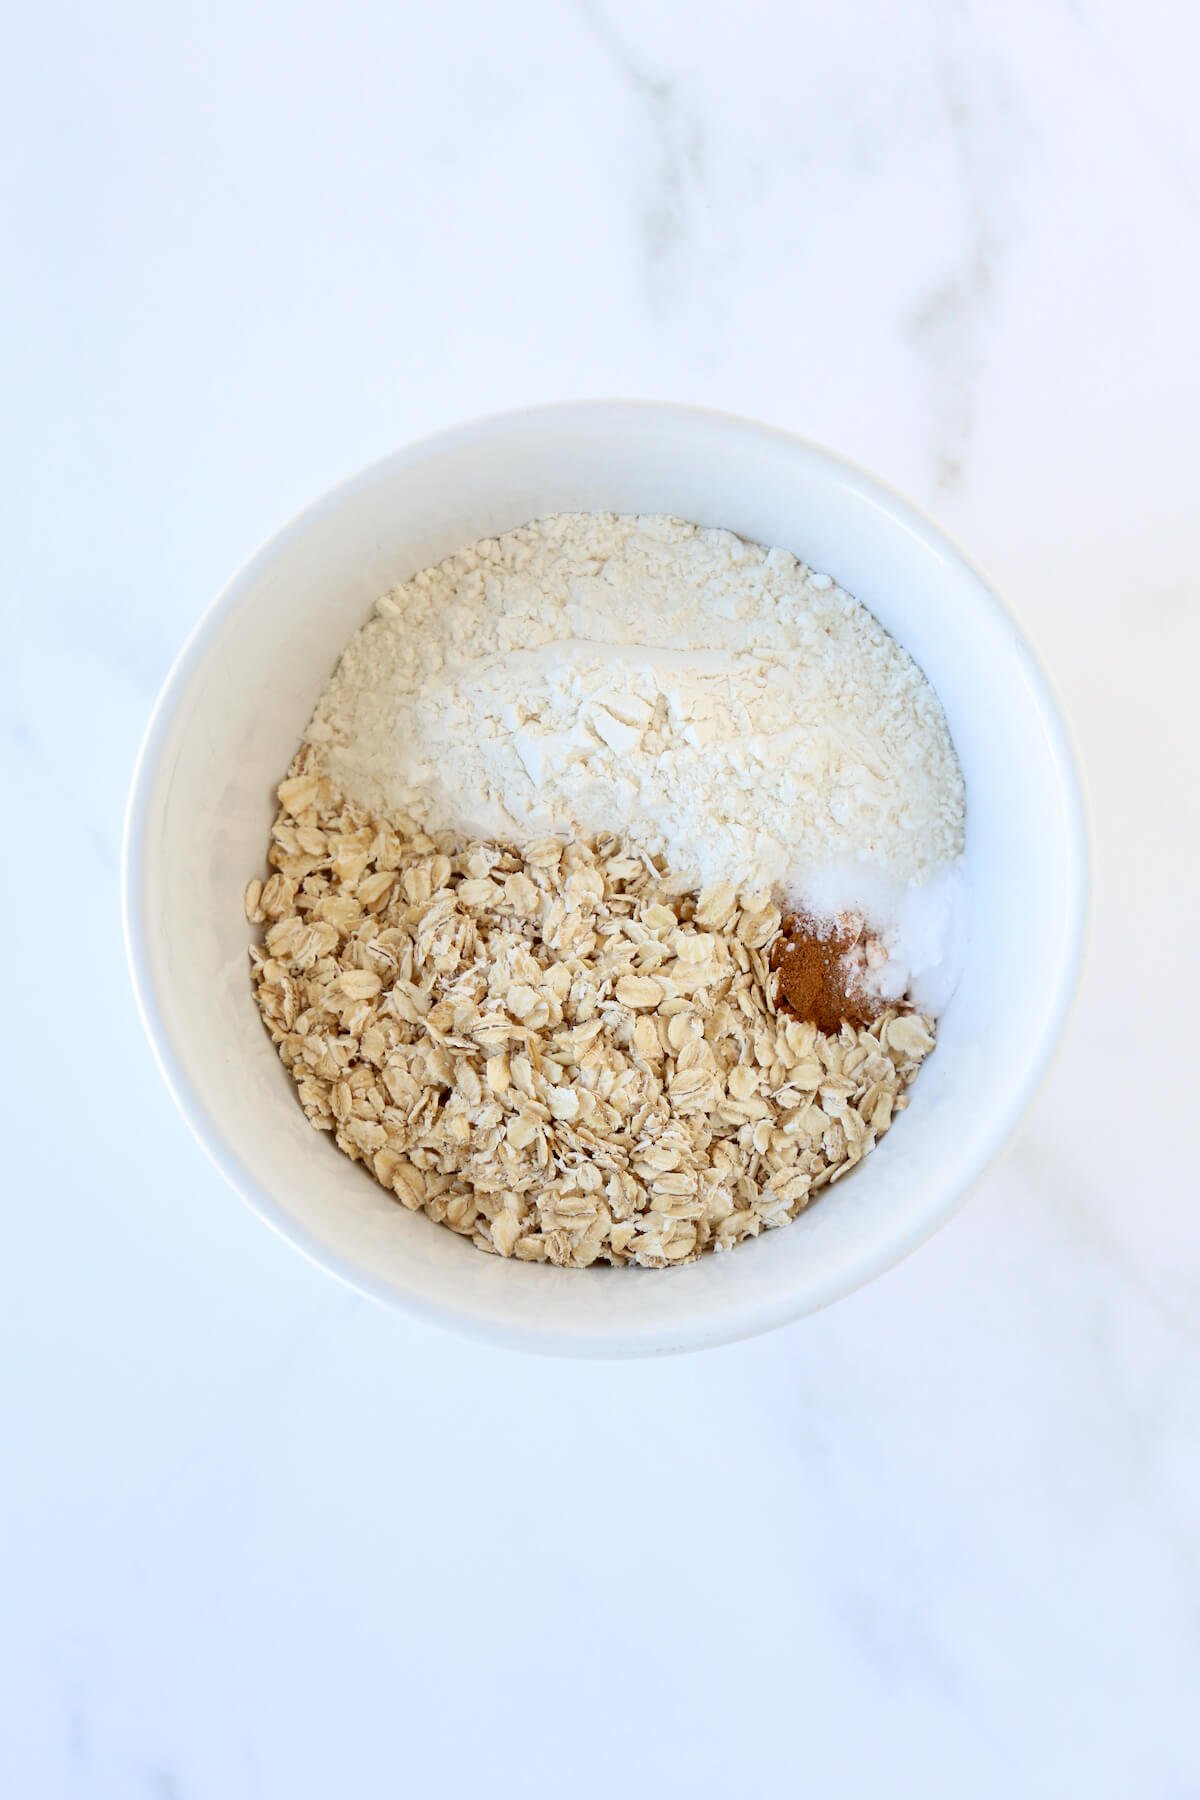 Flour, oatmeal and cinnamon in a white bowl.